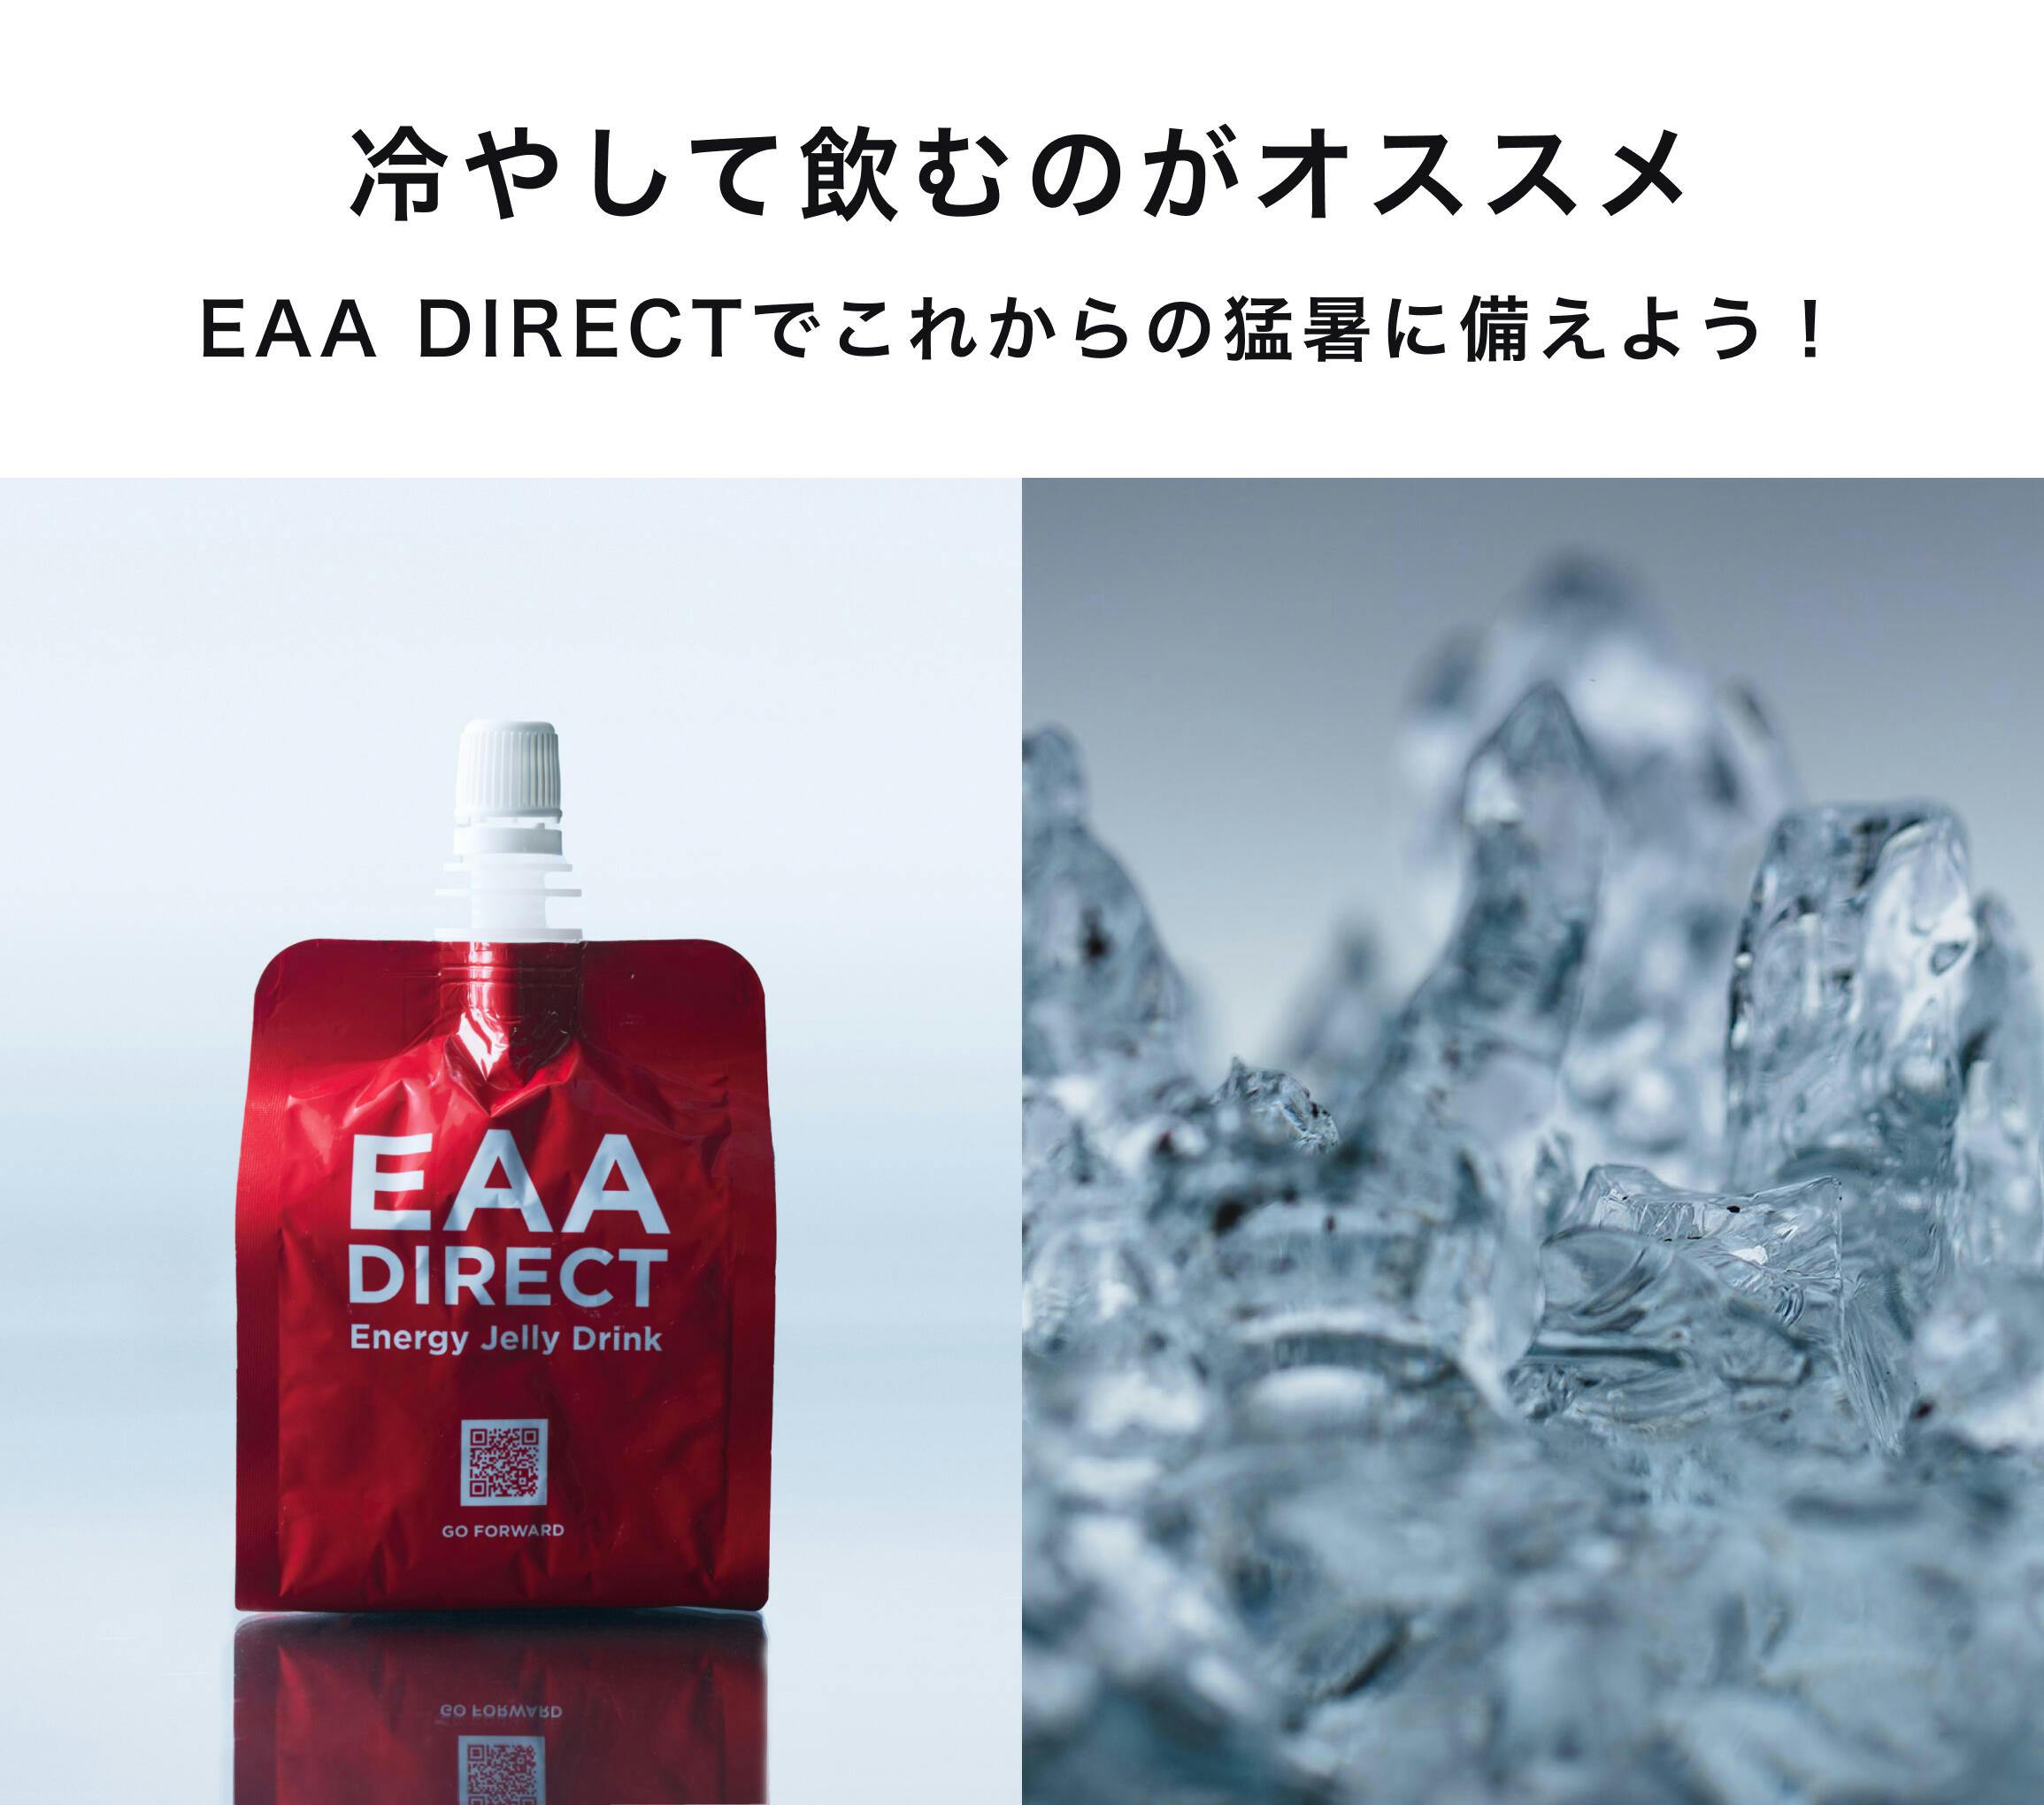 EAA DIRECT Energy Jelly Drink 「ギア、上がる」